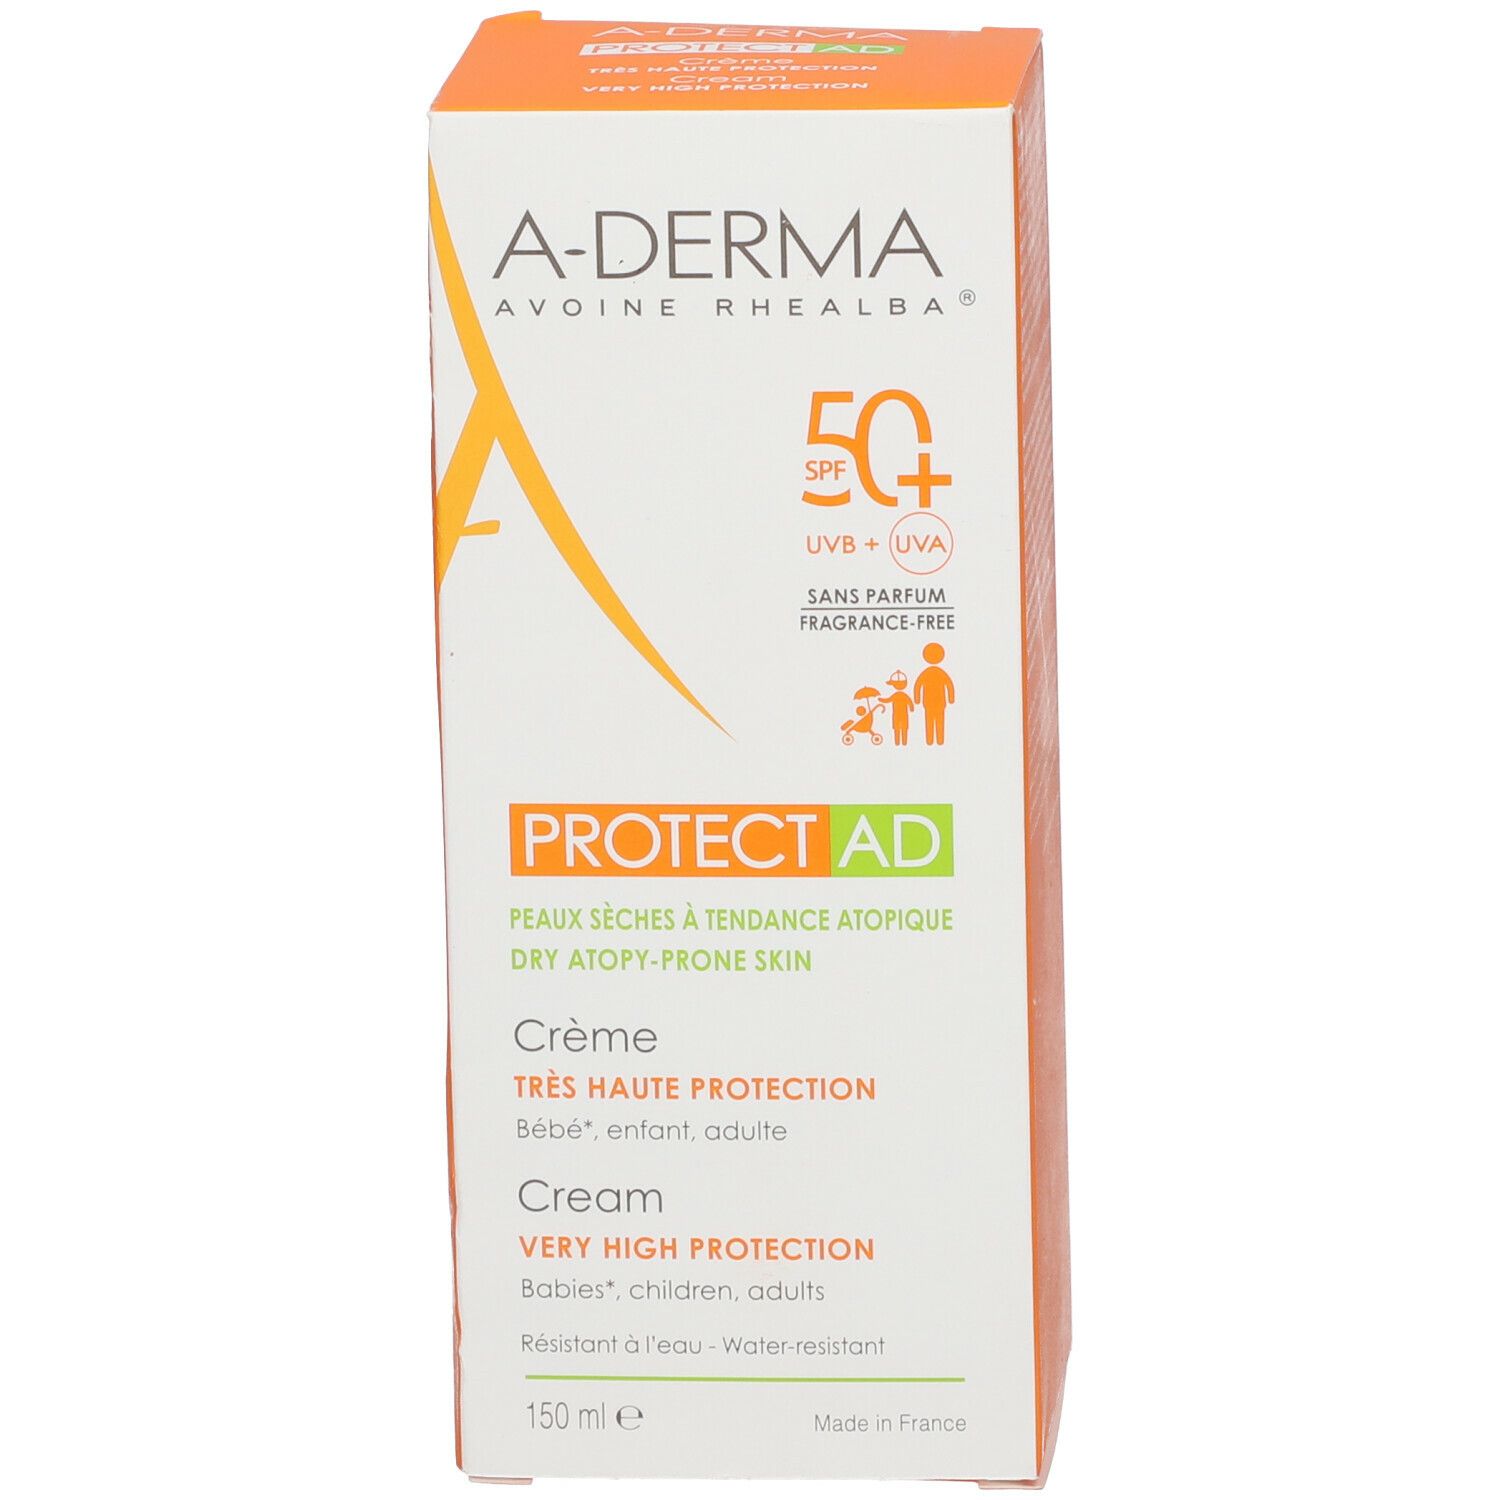 A-Derma Protect AD - SPF50+